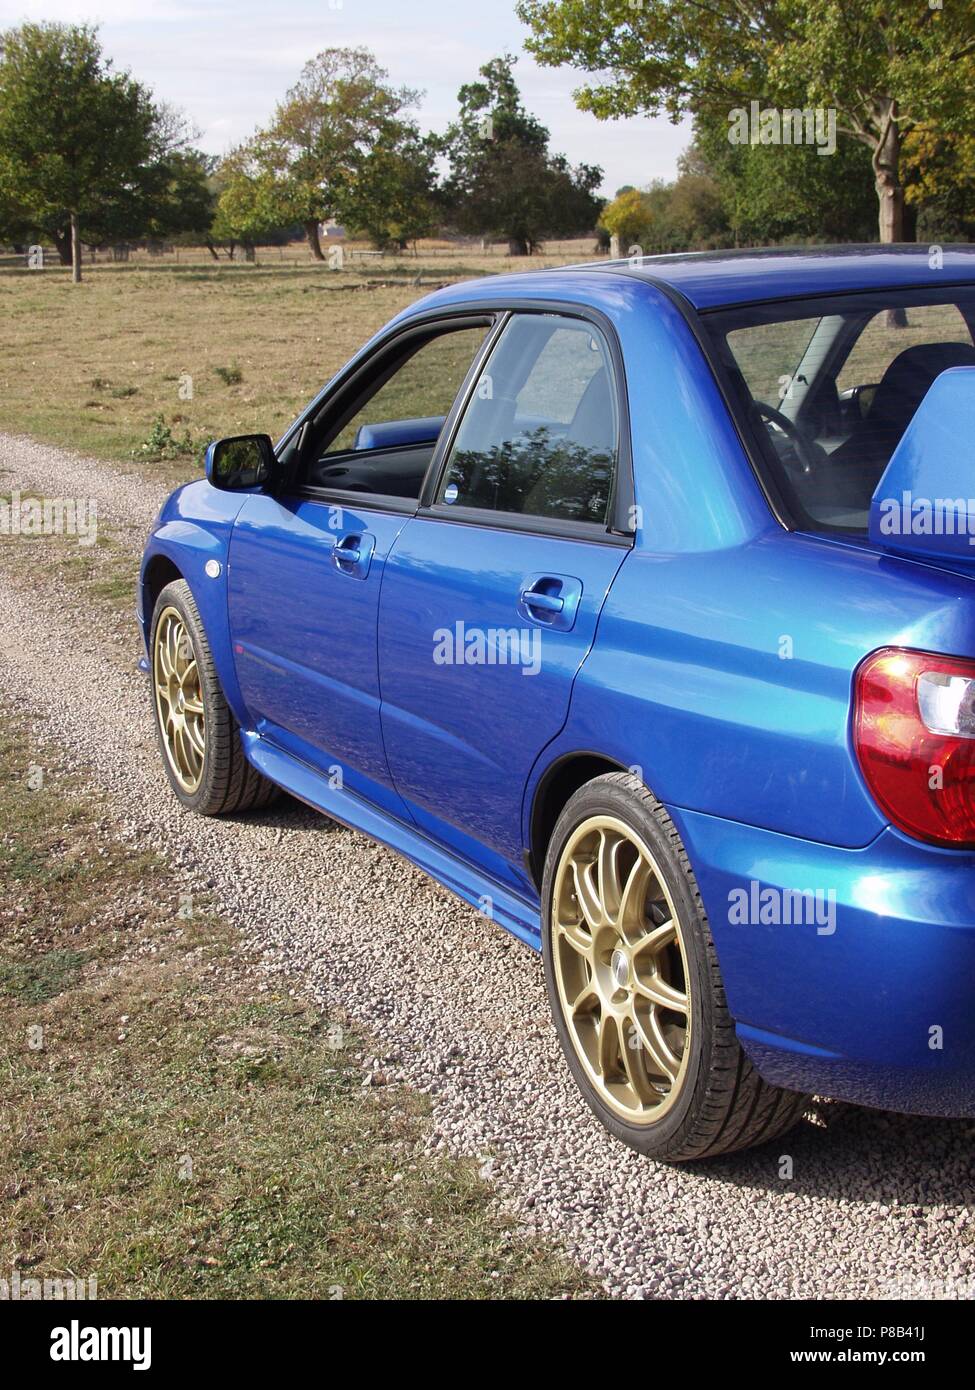 Subaru impreza sti hi-res stock photography and images - Alamy